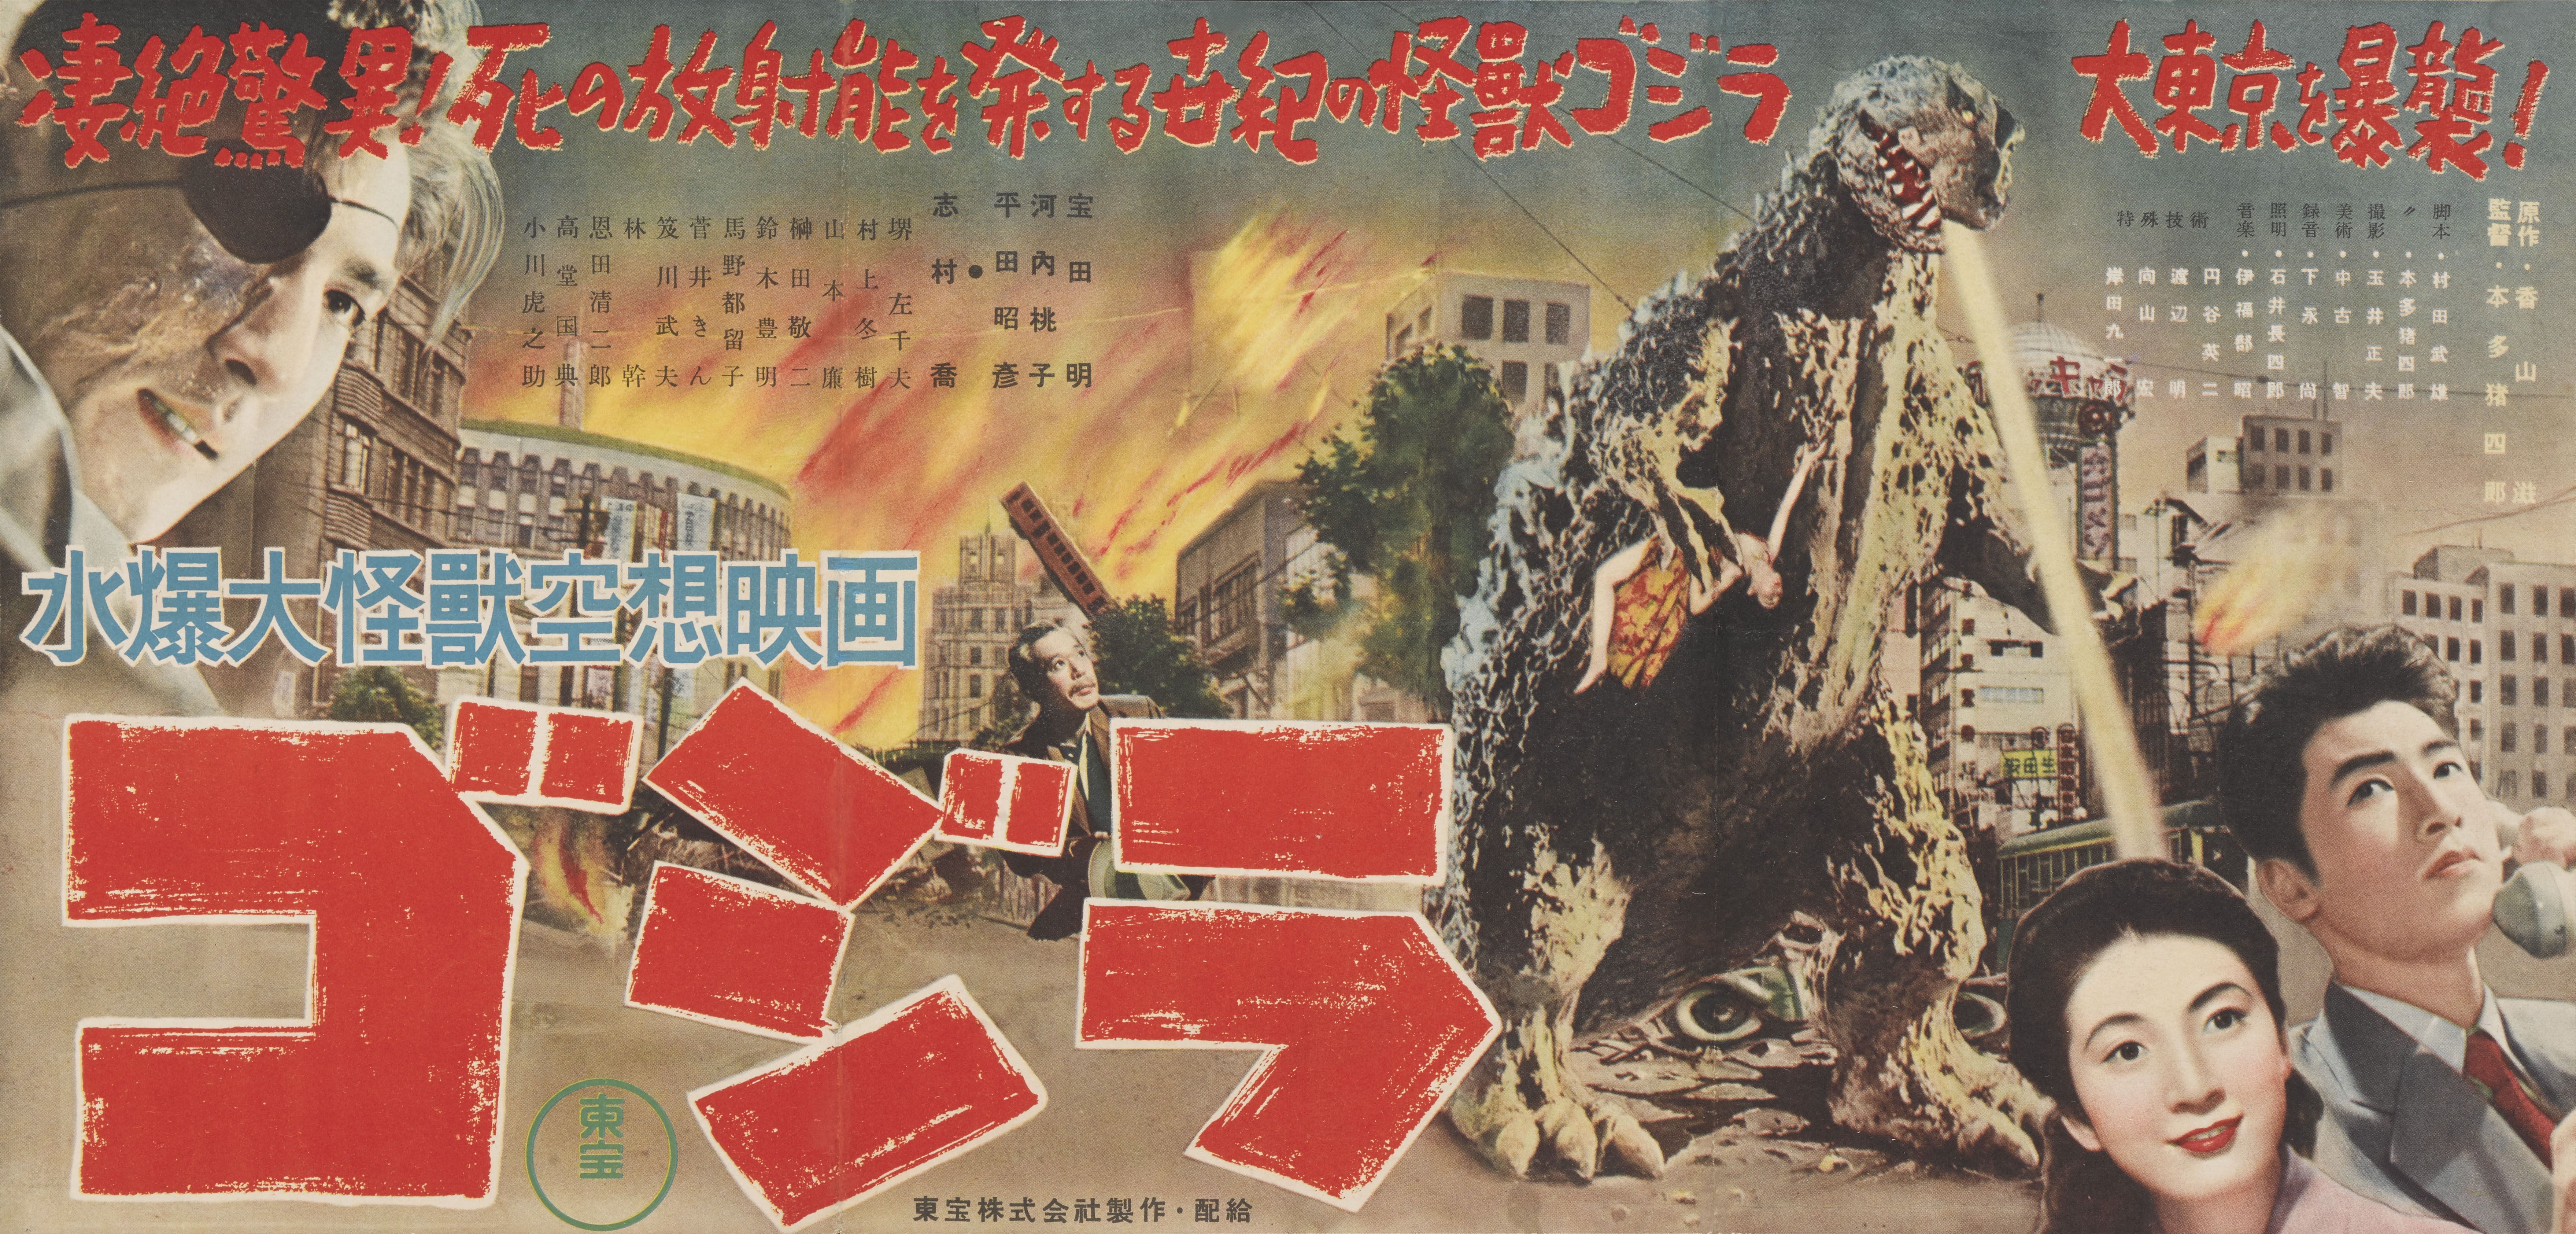 Gojira / Godzilla (1954) Original Japanese press sheet poster Unframed: 9 1/2 x 20 in. (24.2 x 50.8